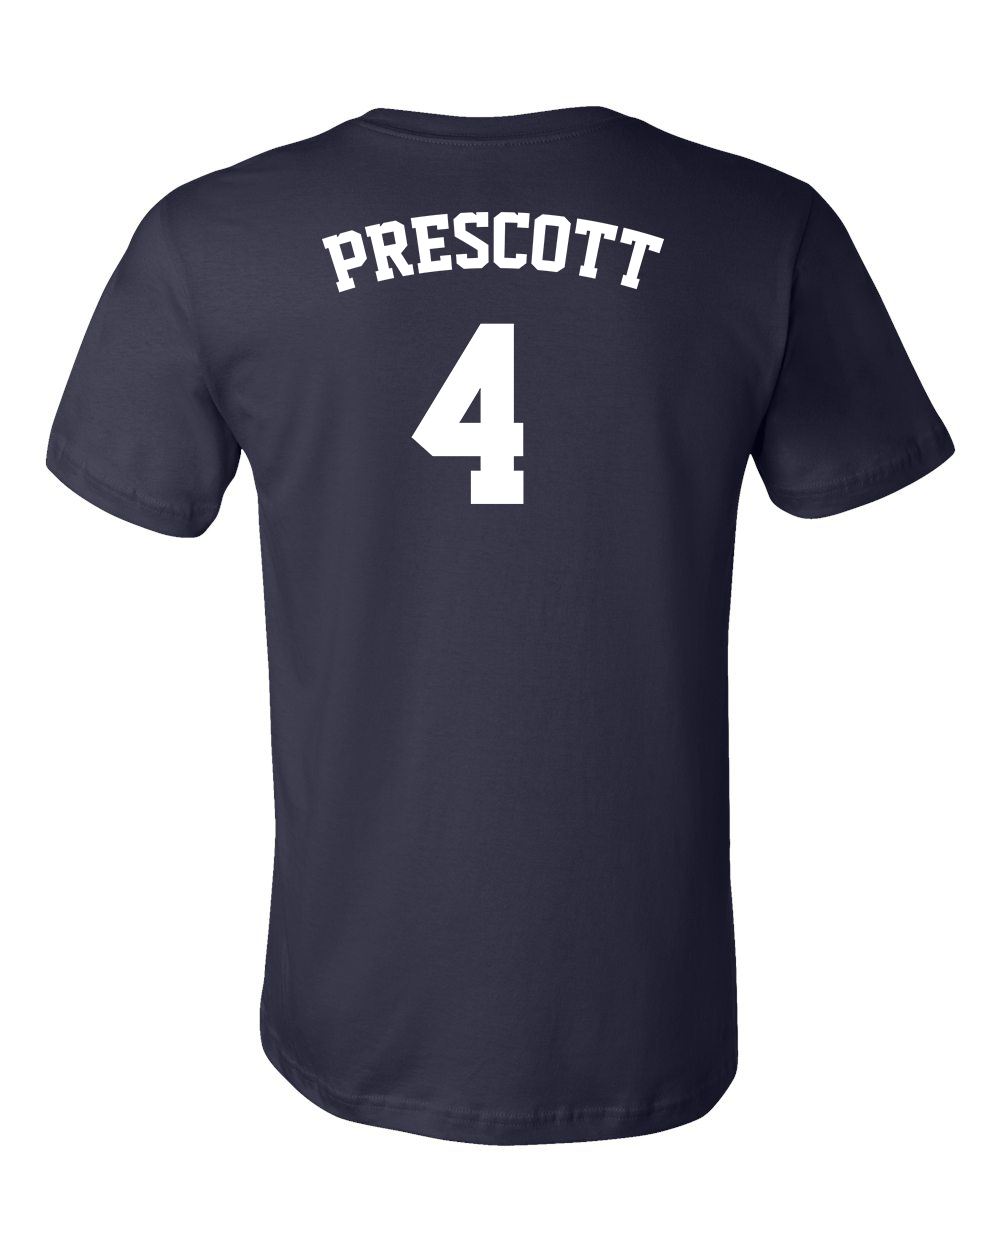 Dak Prescott #4 Dallas Cowboys Jersey player shirt